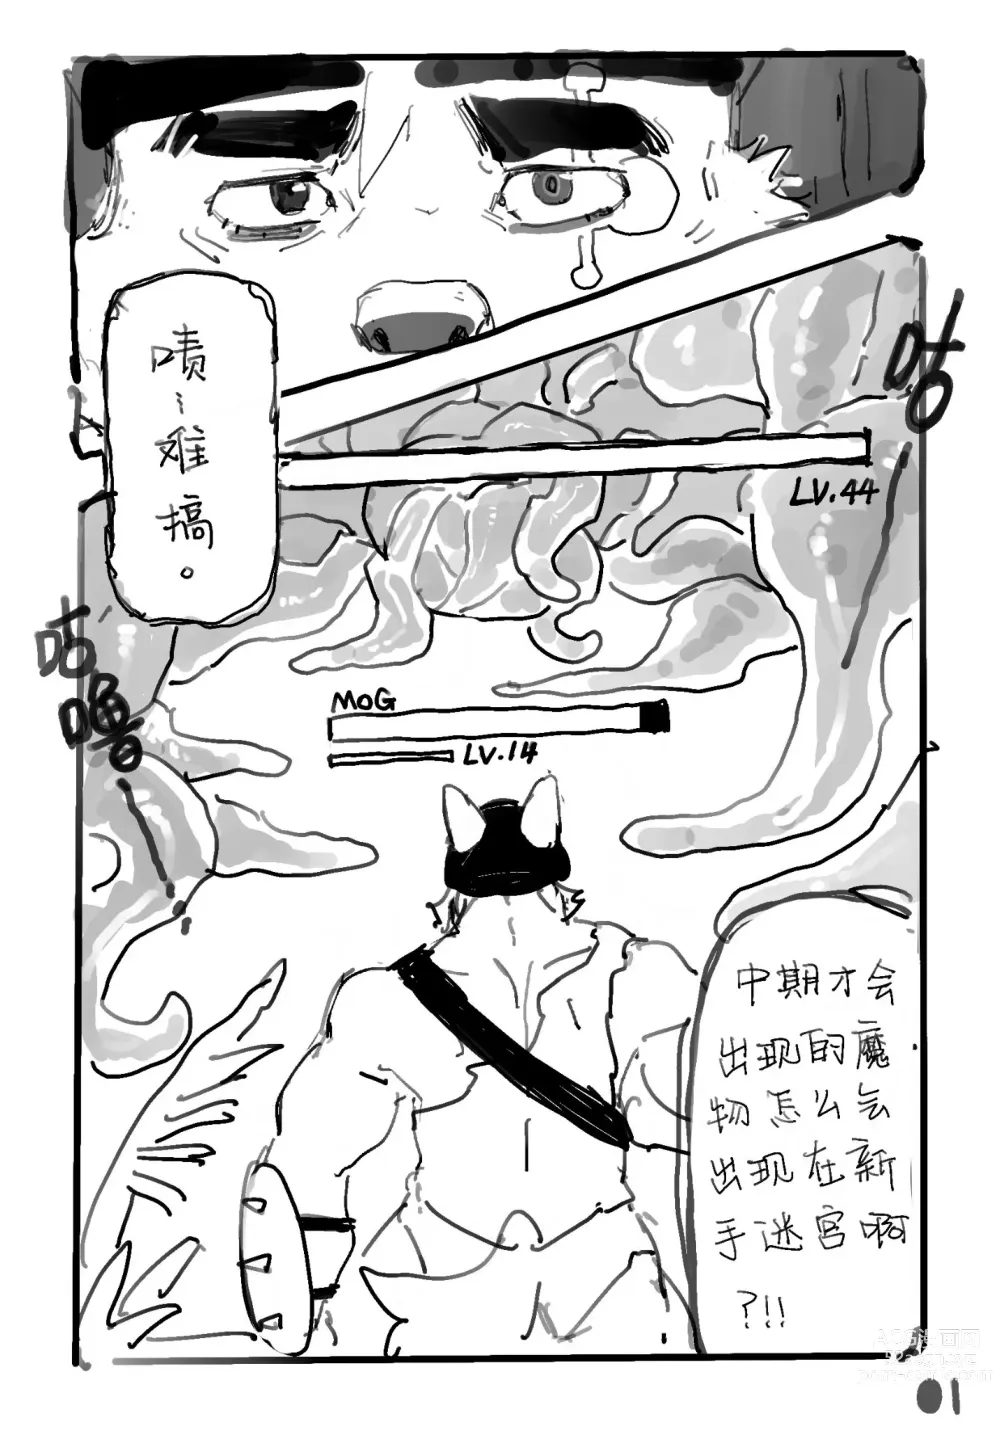 Page 1 of doujinshi No Title